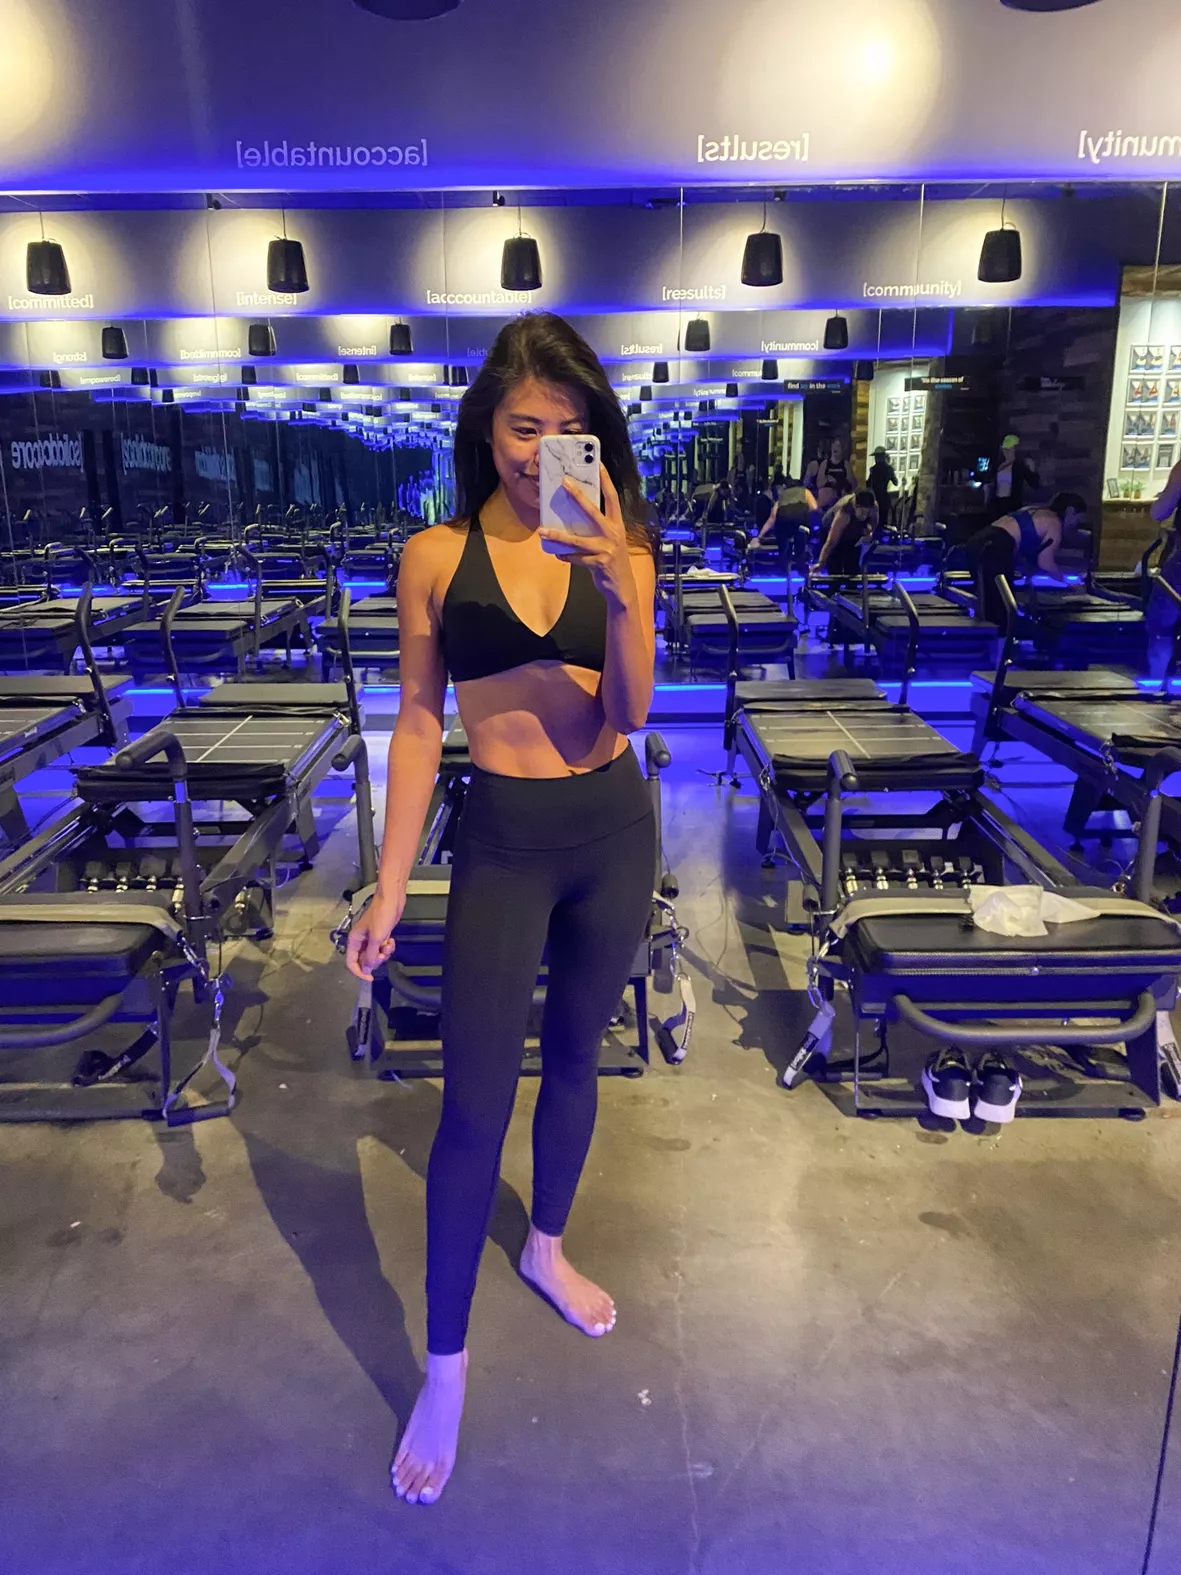 Aoxjox Women's Workout Sports Bras Fitness Backless Padded Satara Low  Impact Bra Yoga Crop Tank Top